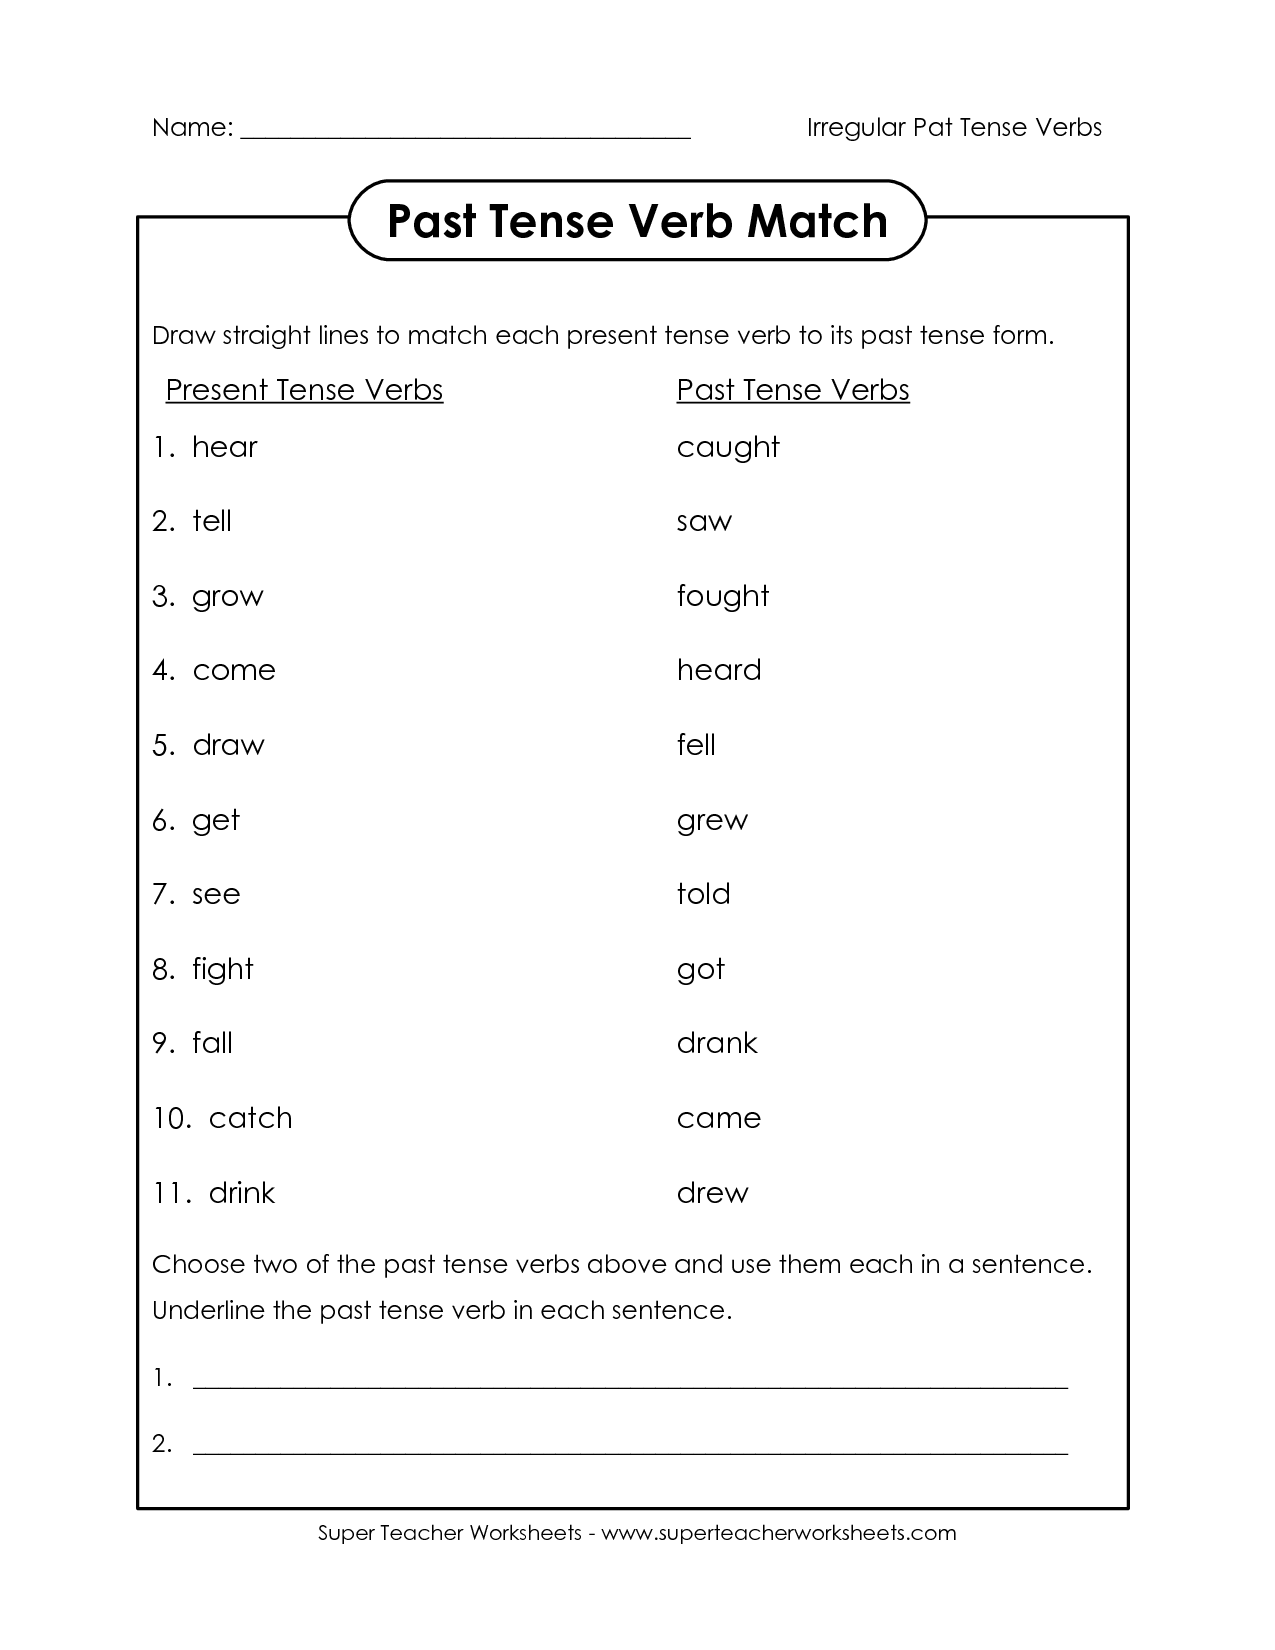 Second Grade Irregular Past Tense Verbs Worksheets